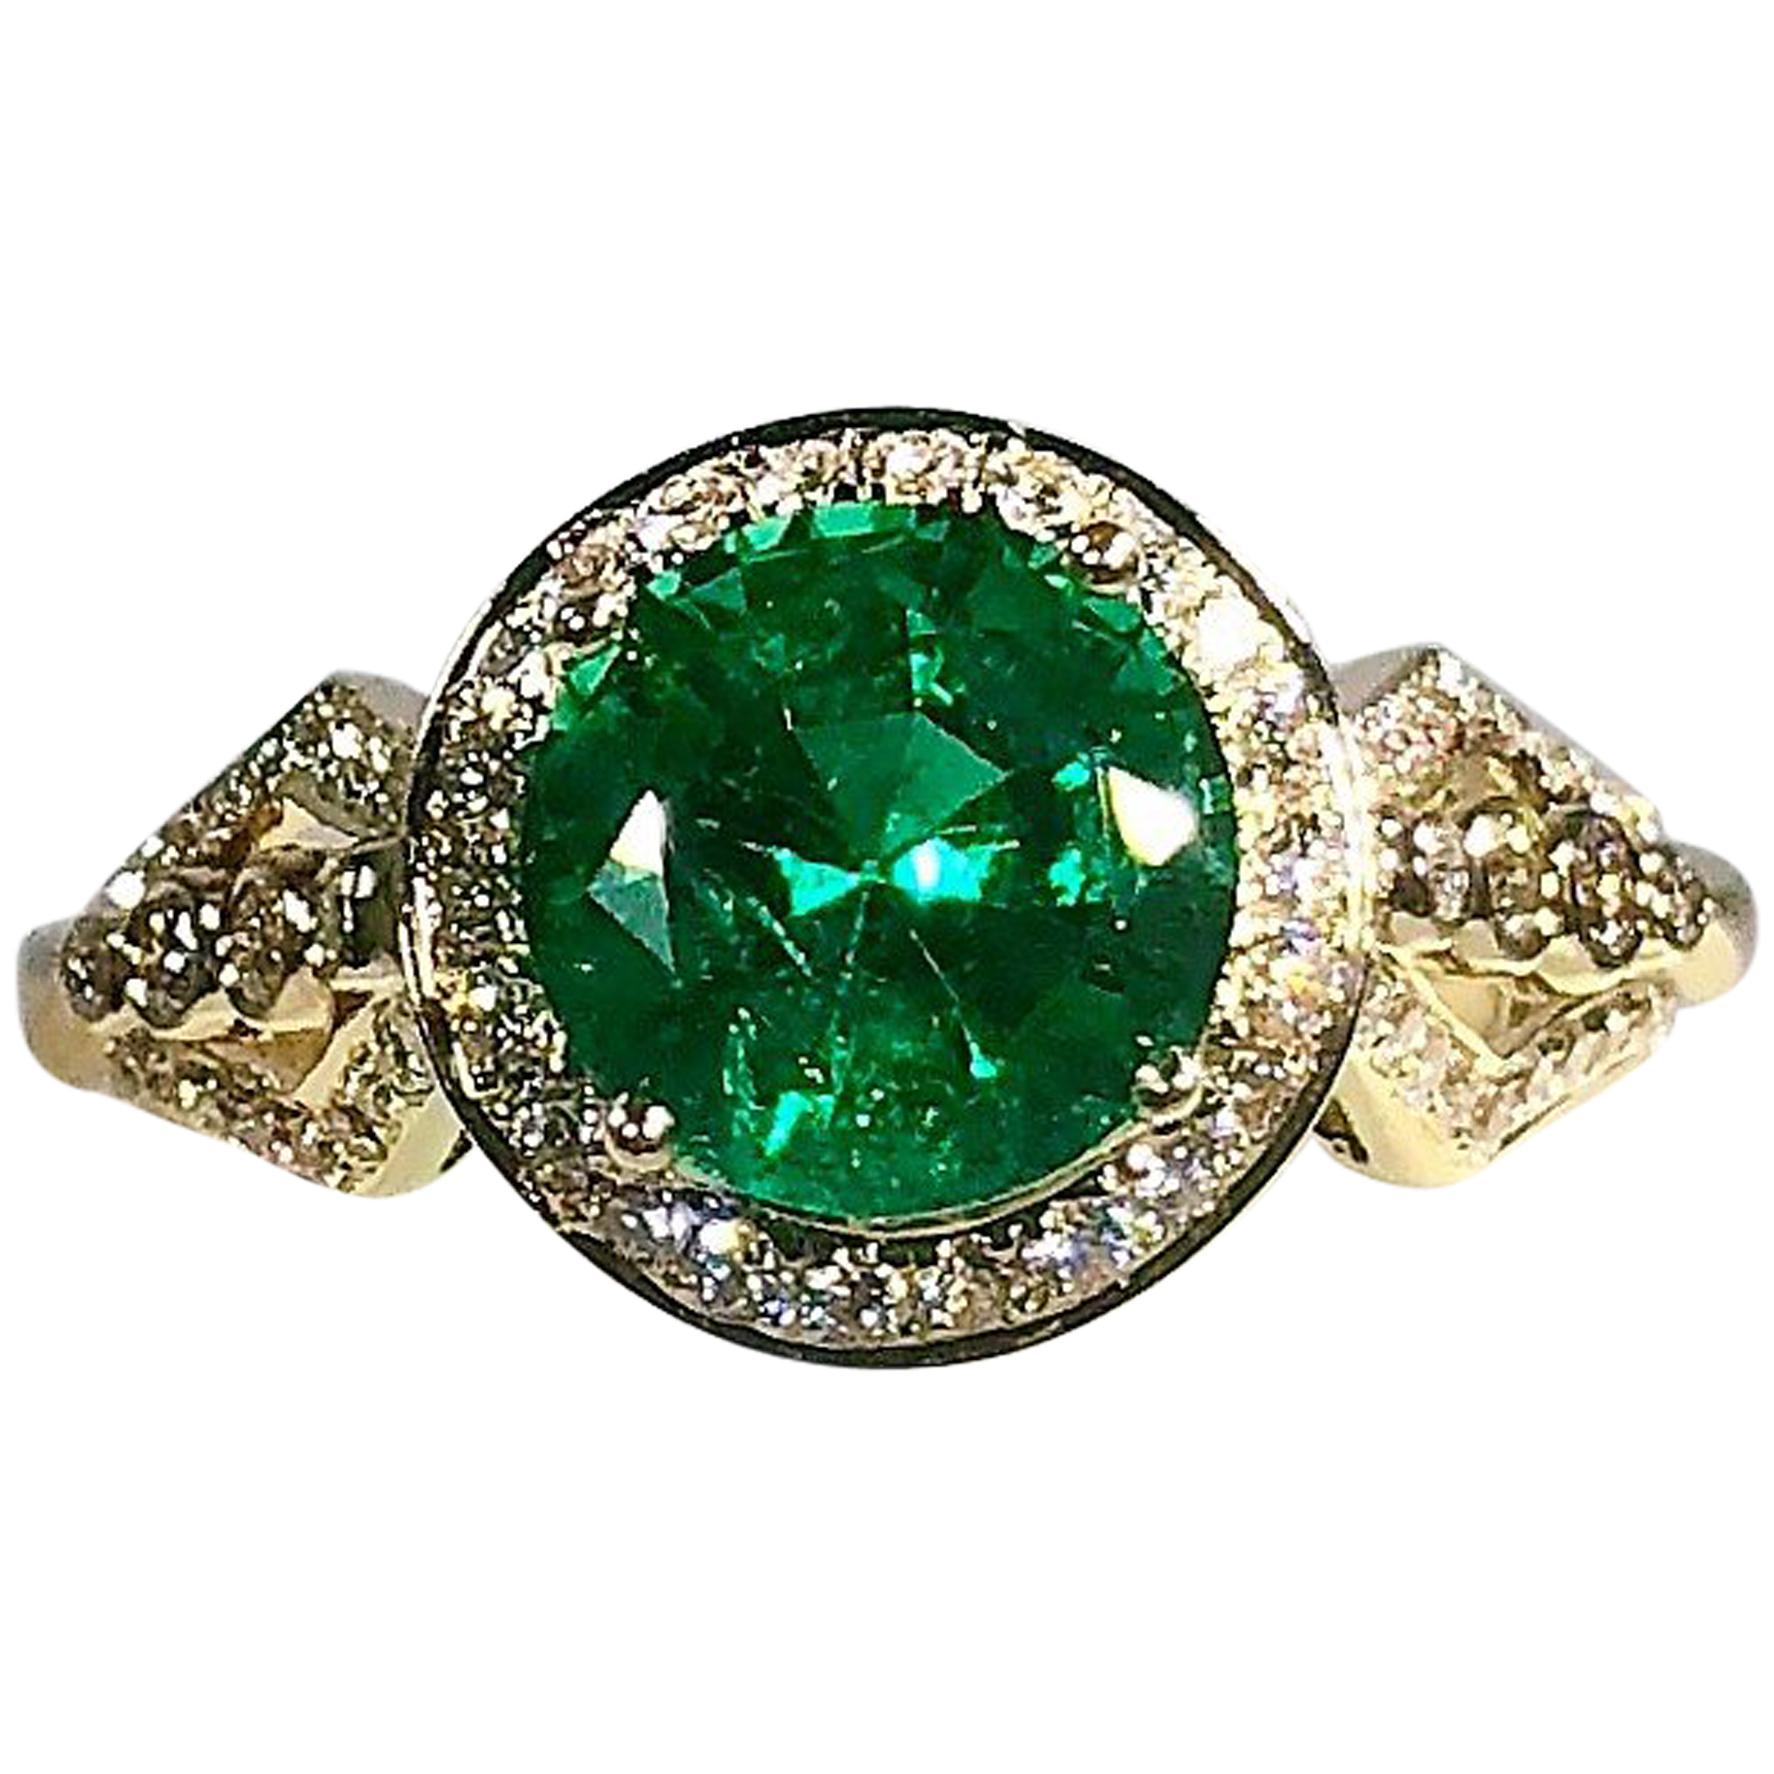 Philip Zahm Designs 18 Karat 1.81 Carat Round Zambian Emerald and Diamond Ring